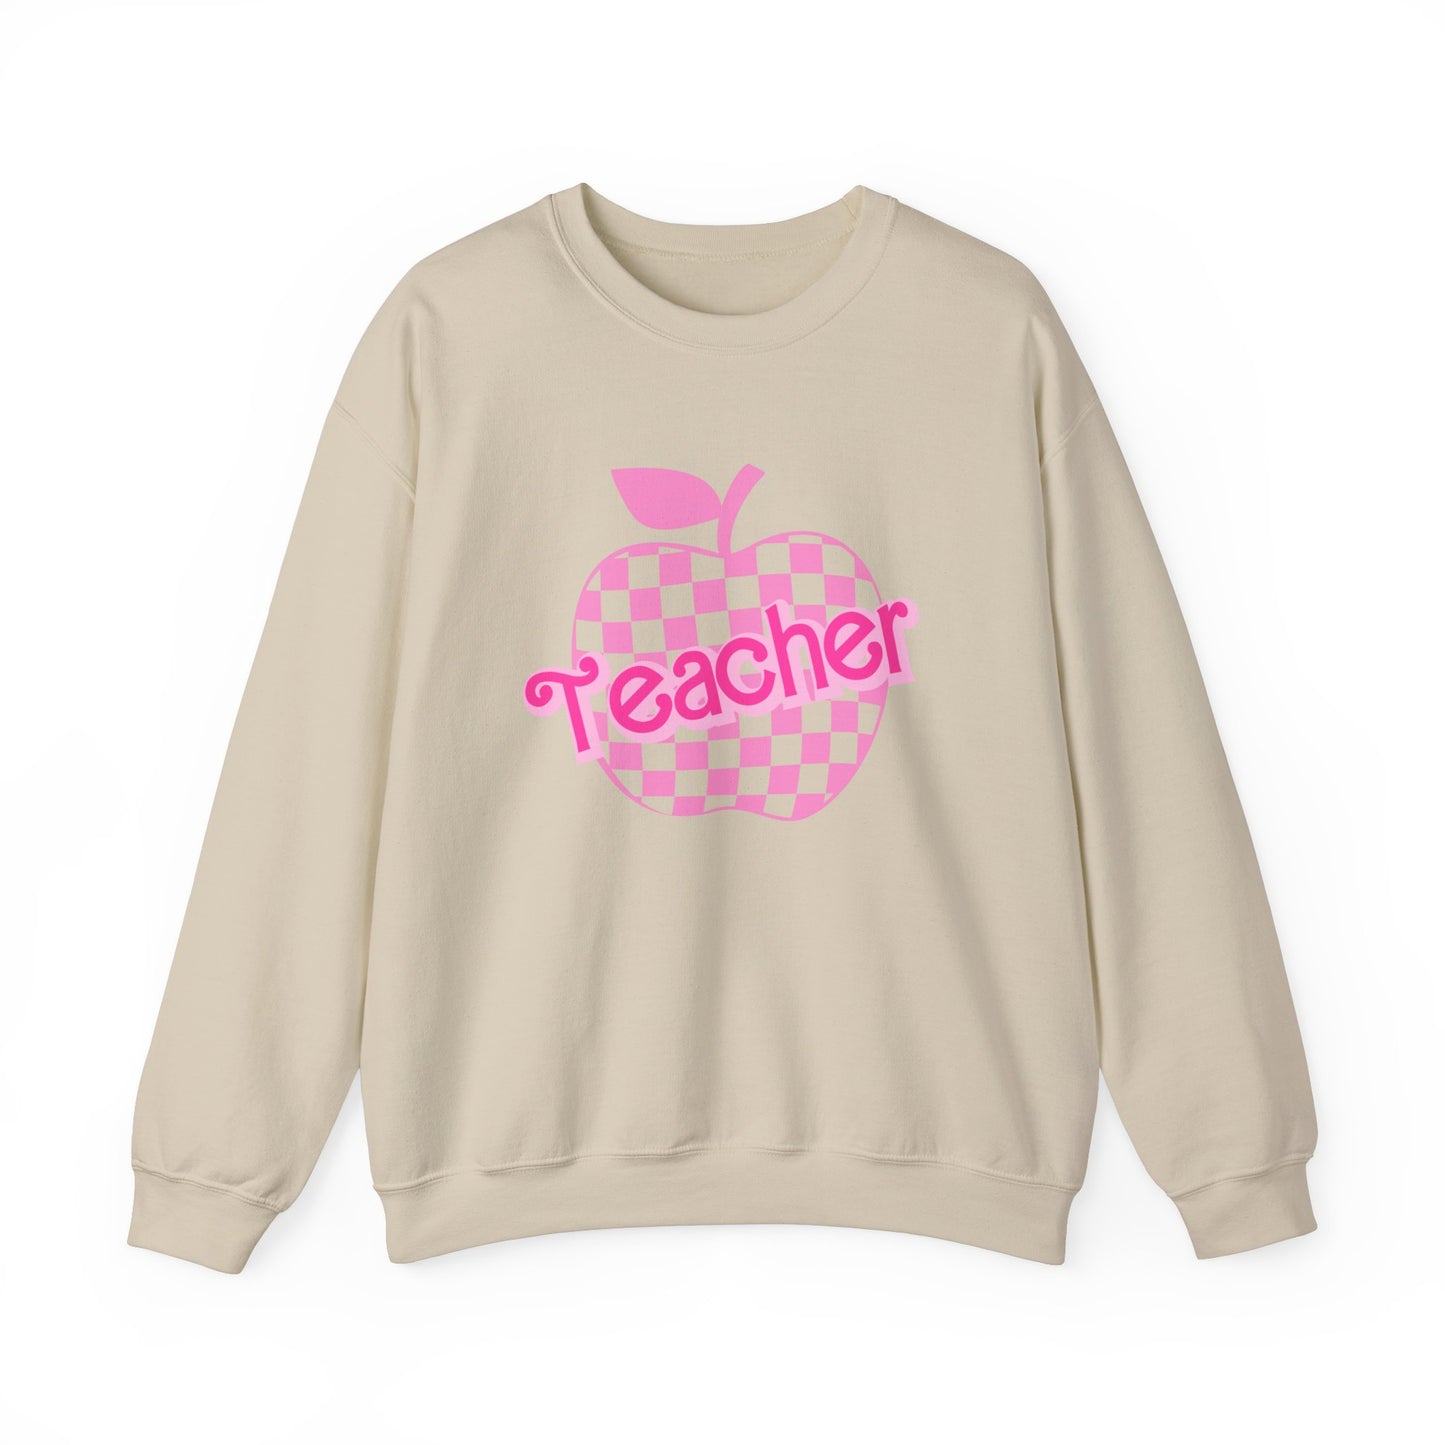 My Job is Teach Sweatshirt, Trendy Teacher Sweatshirt, Retro Back to school, Teacher Appreciation, Checkered Teacher Sweatshirt, SW739